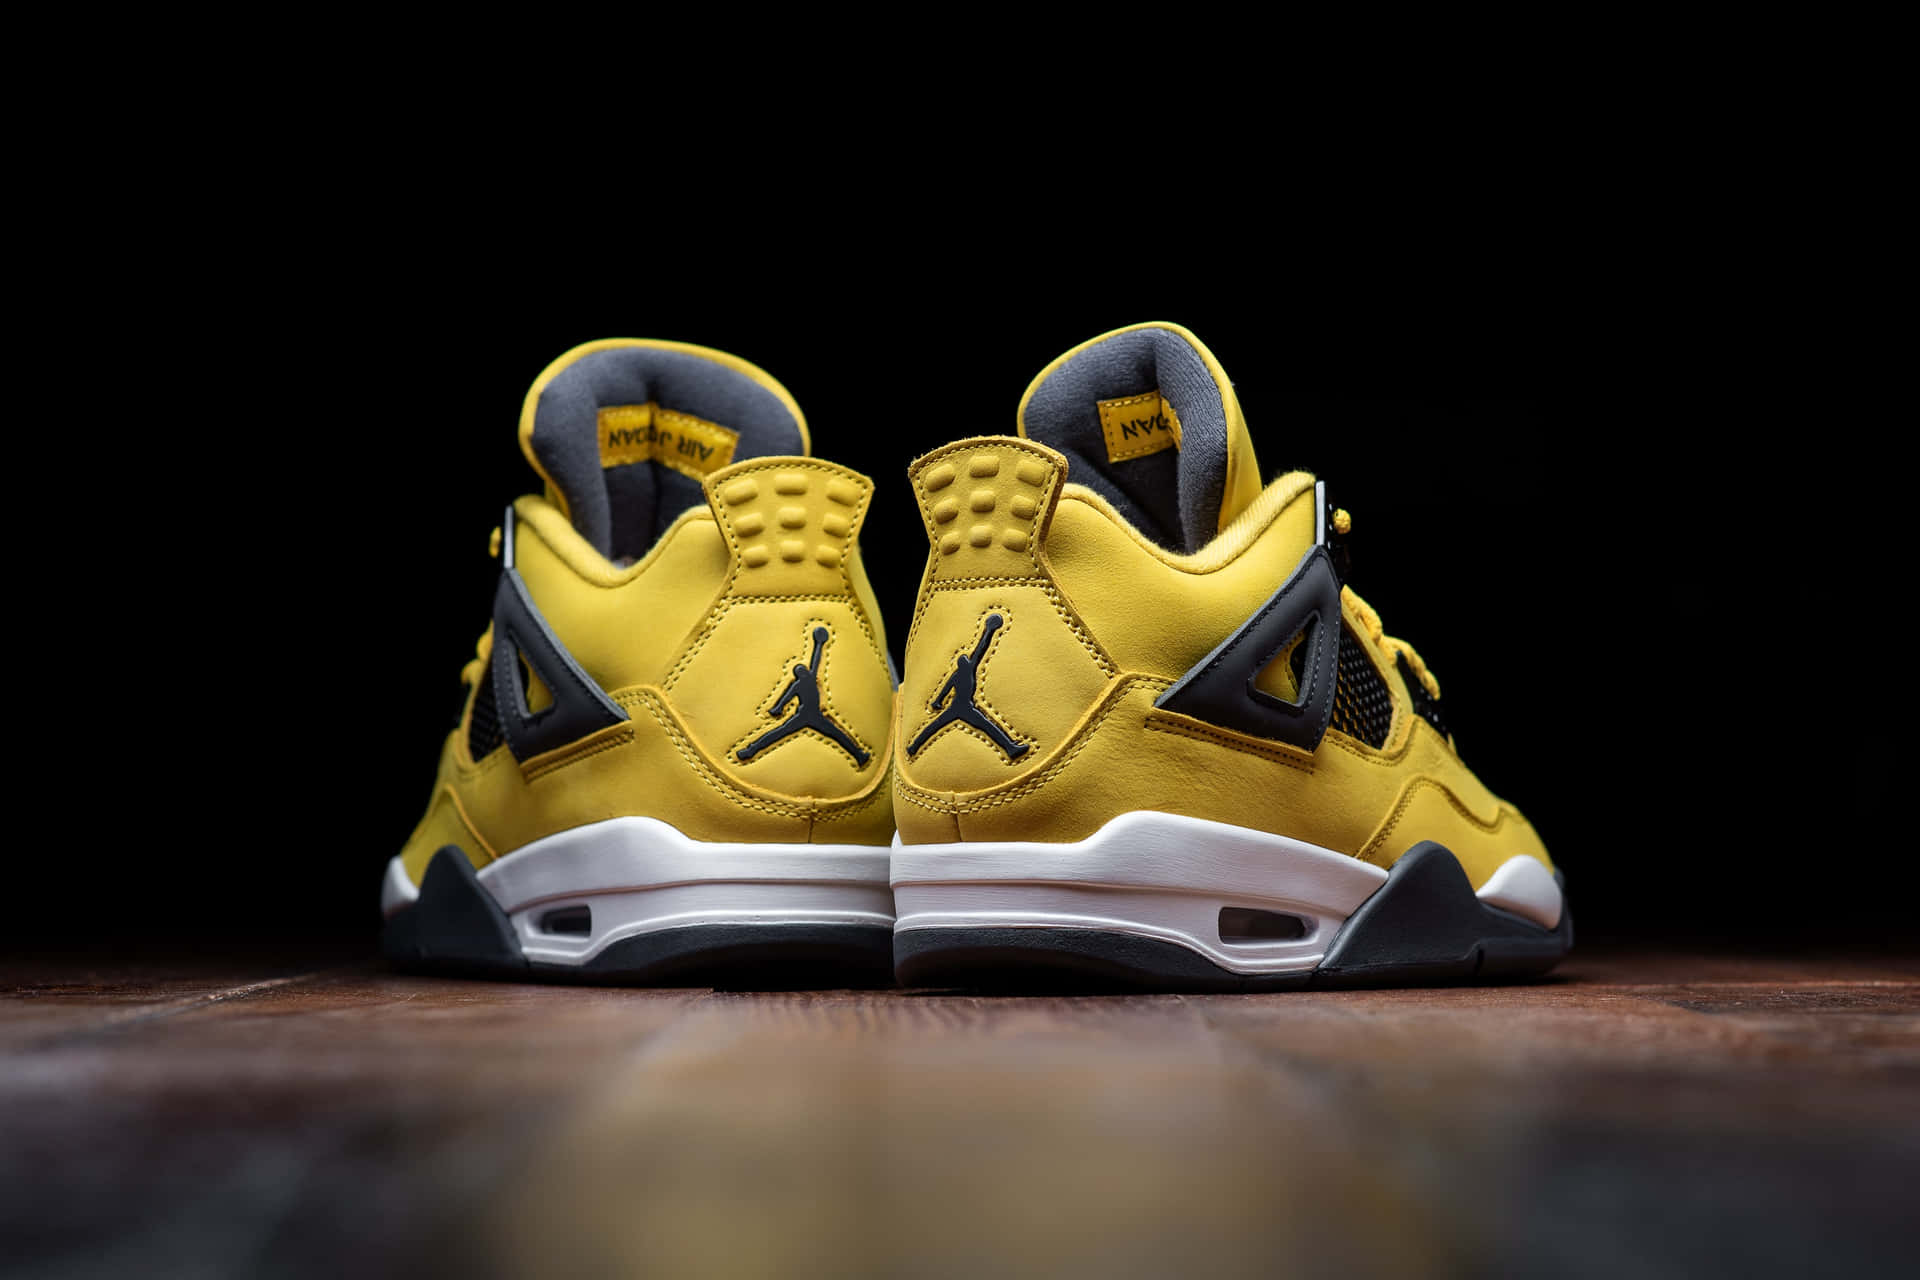 Billede Lyst op din gade stil med disse lyse gule Jordan Sneakers Wallpaper